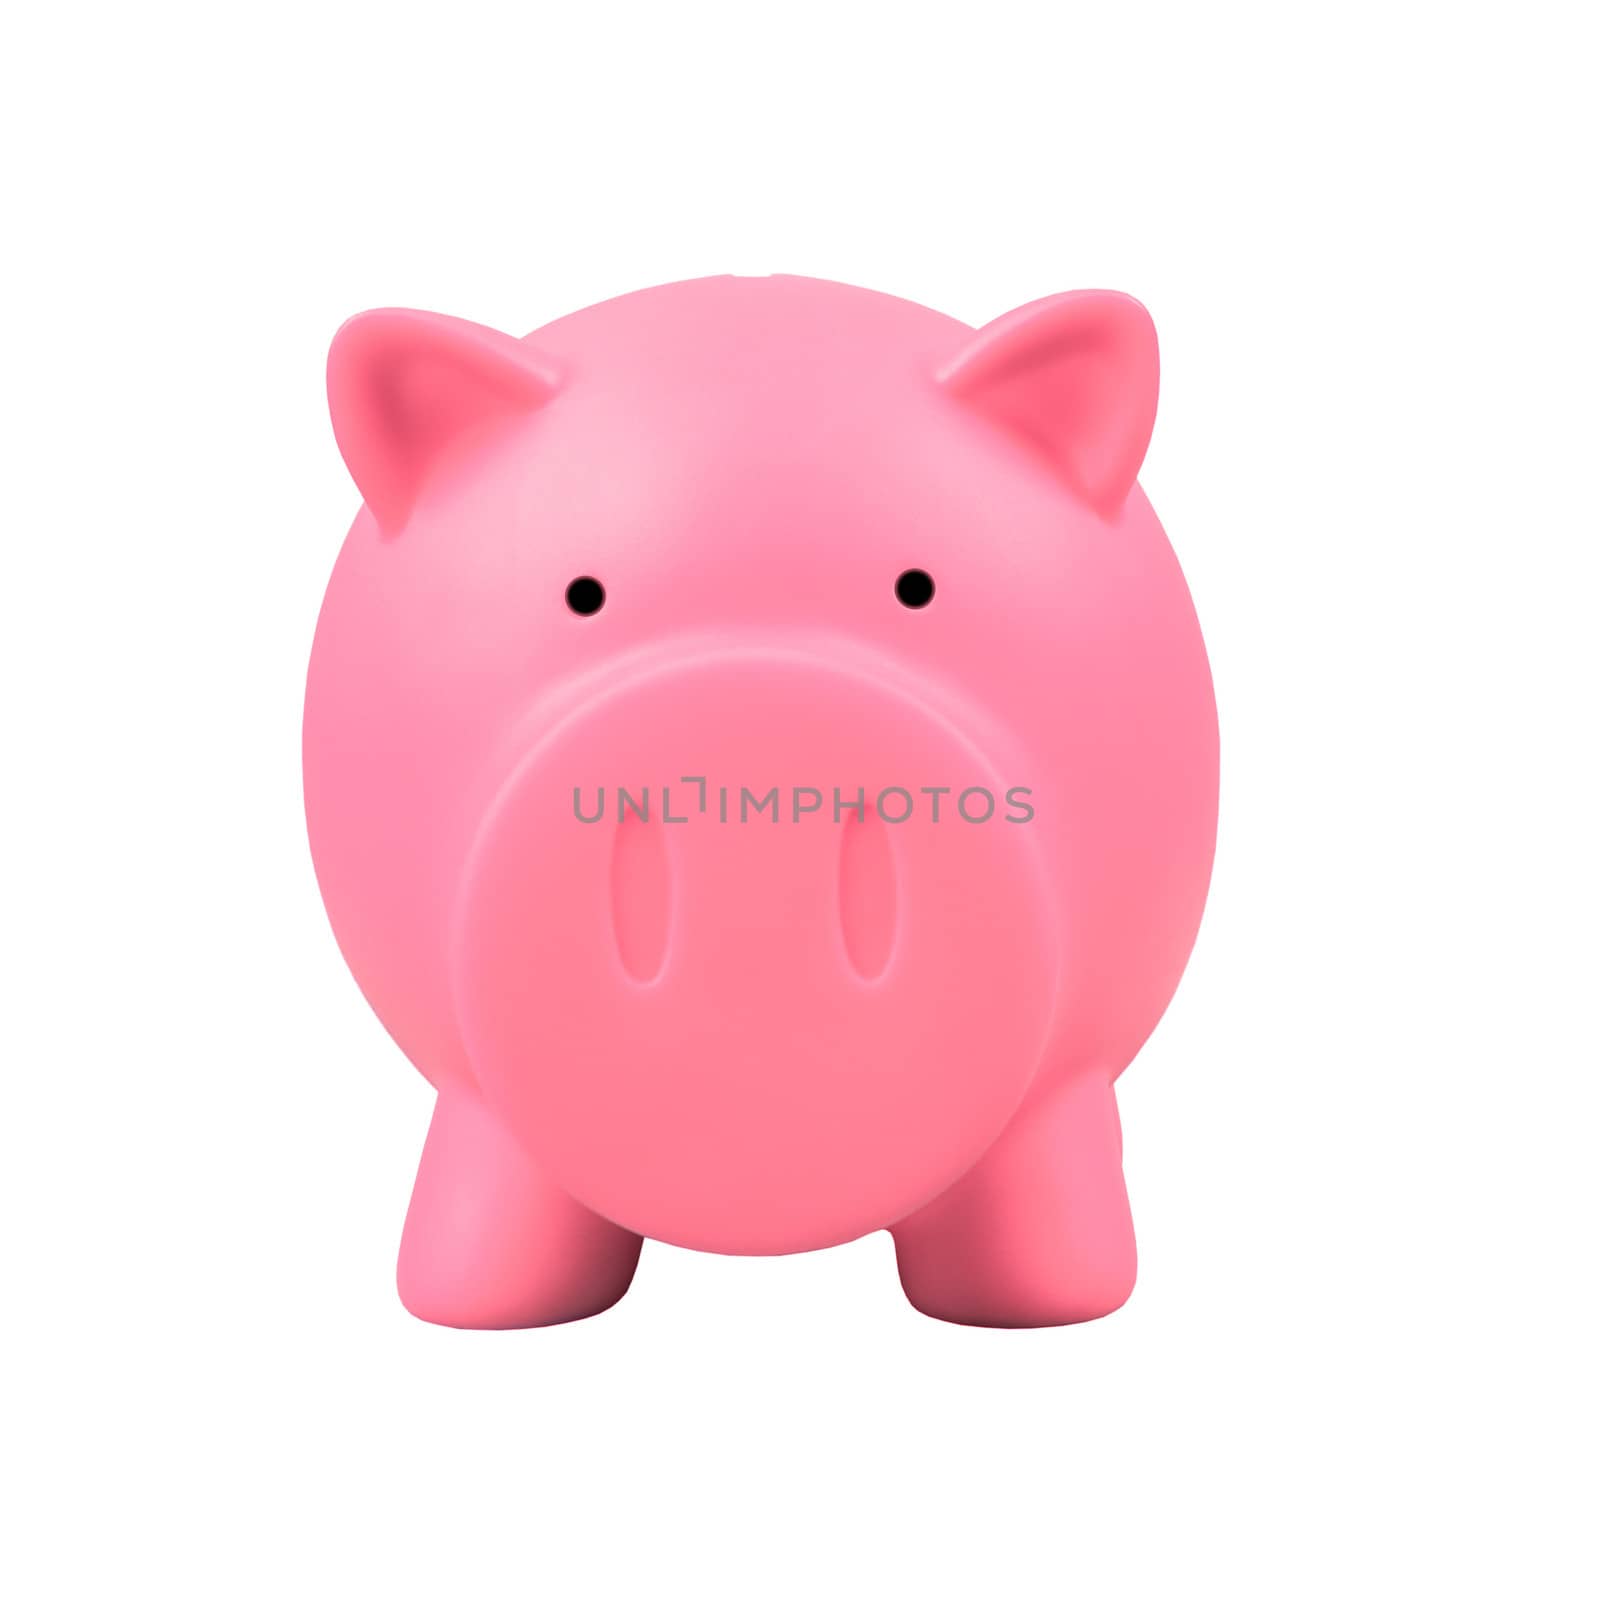 Piggy bank on white background by FrameAngel